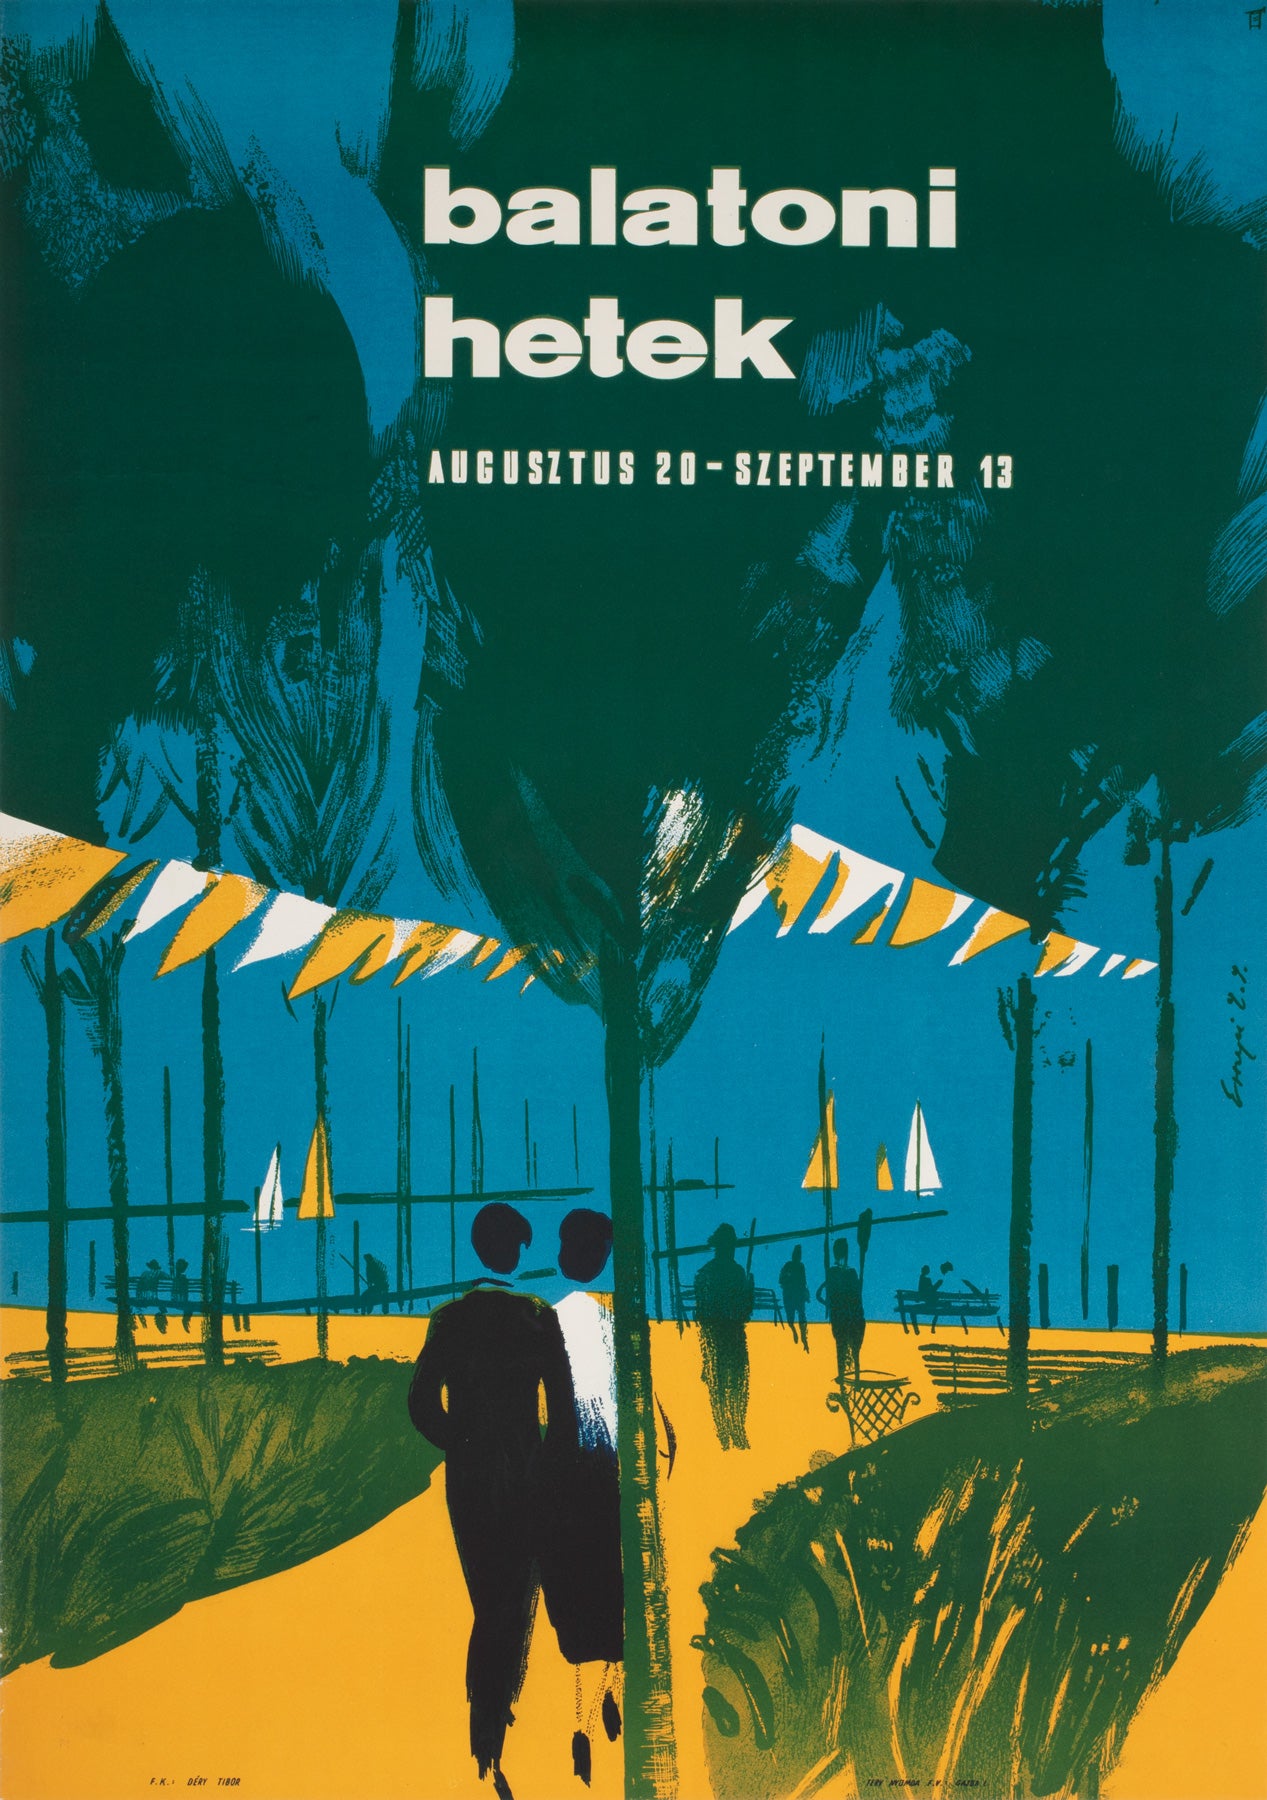 Balaton weeks Balatoni hetek 1959 Hungarian Travel Poster, Ernie Sandor